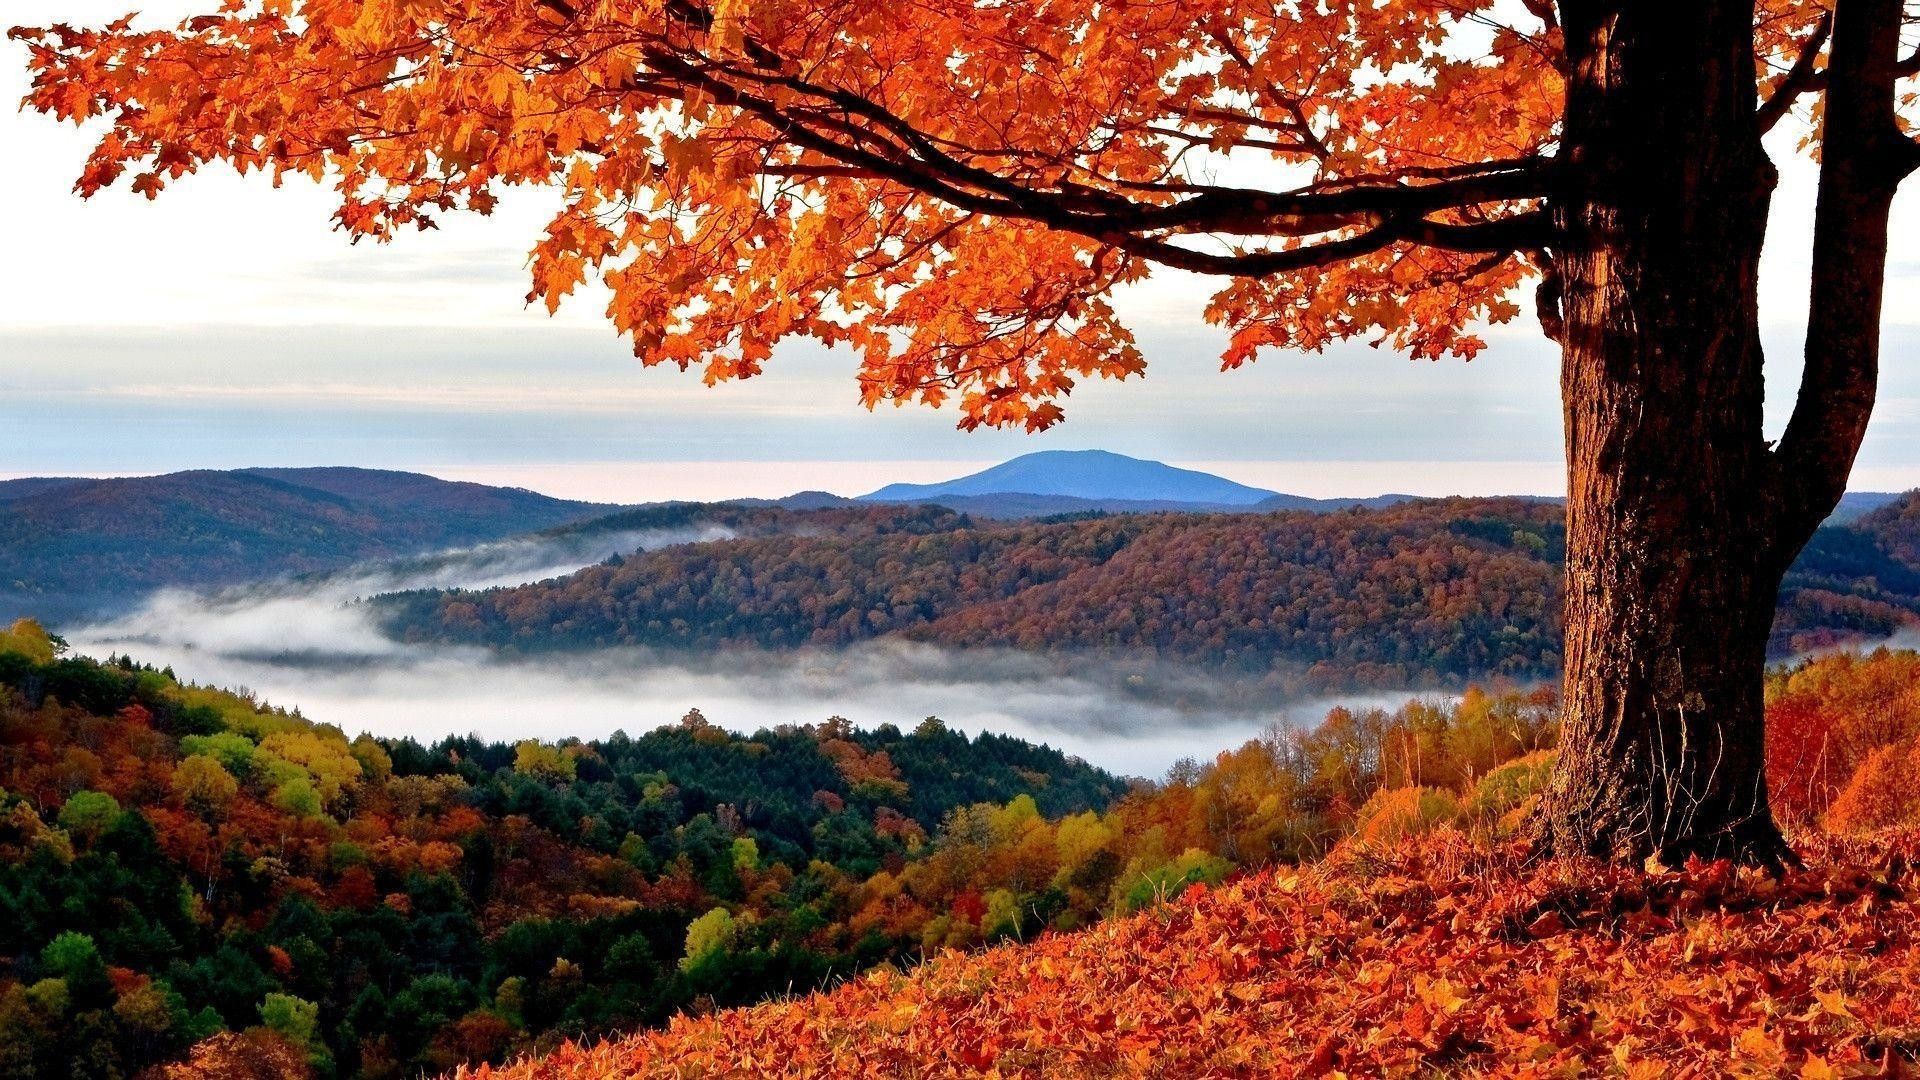 HD Autumn Wallpaper. Background. Photo. Image